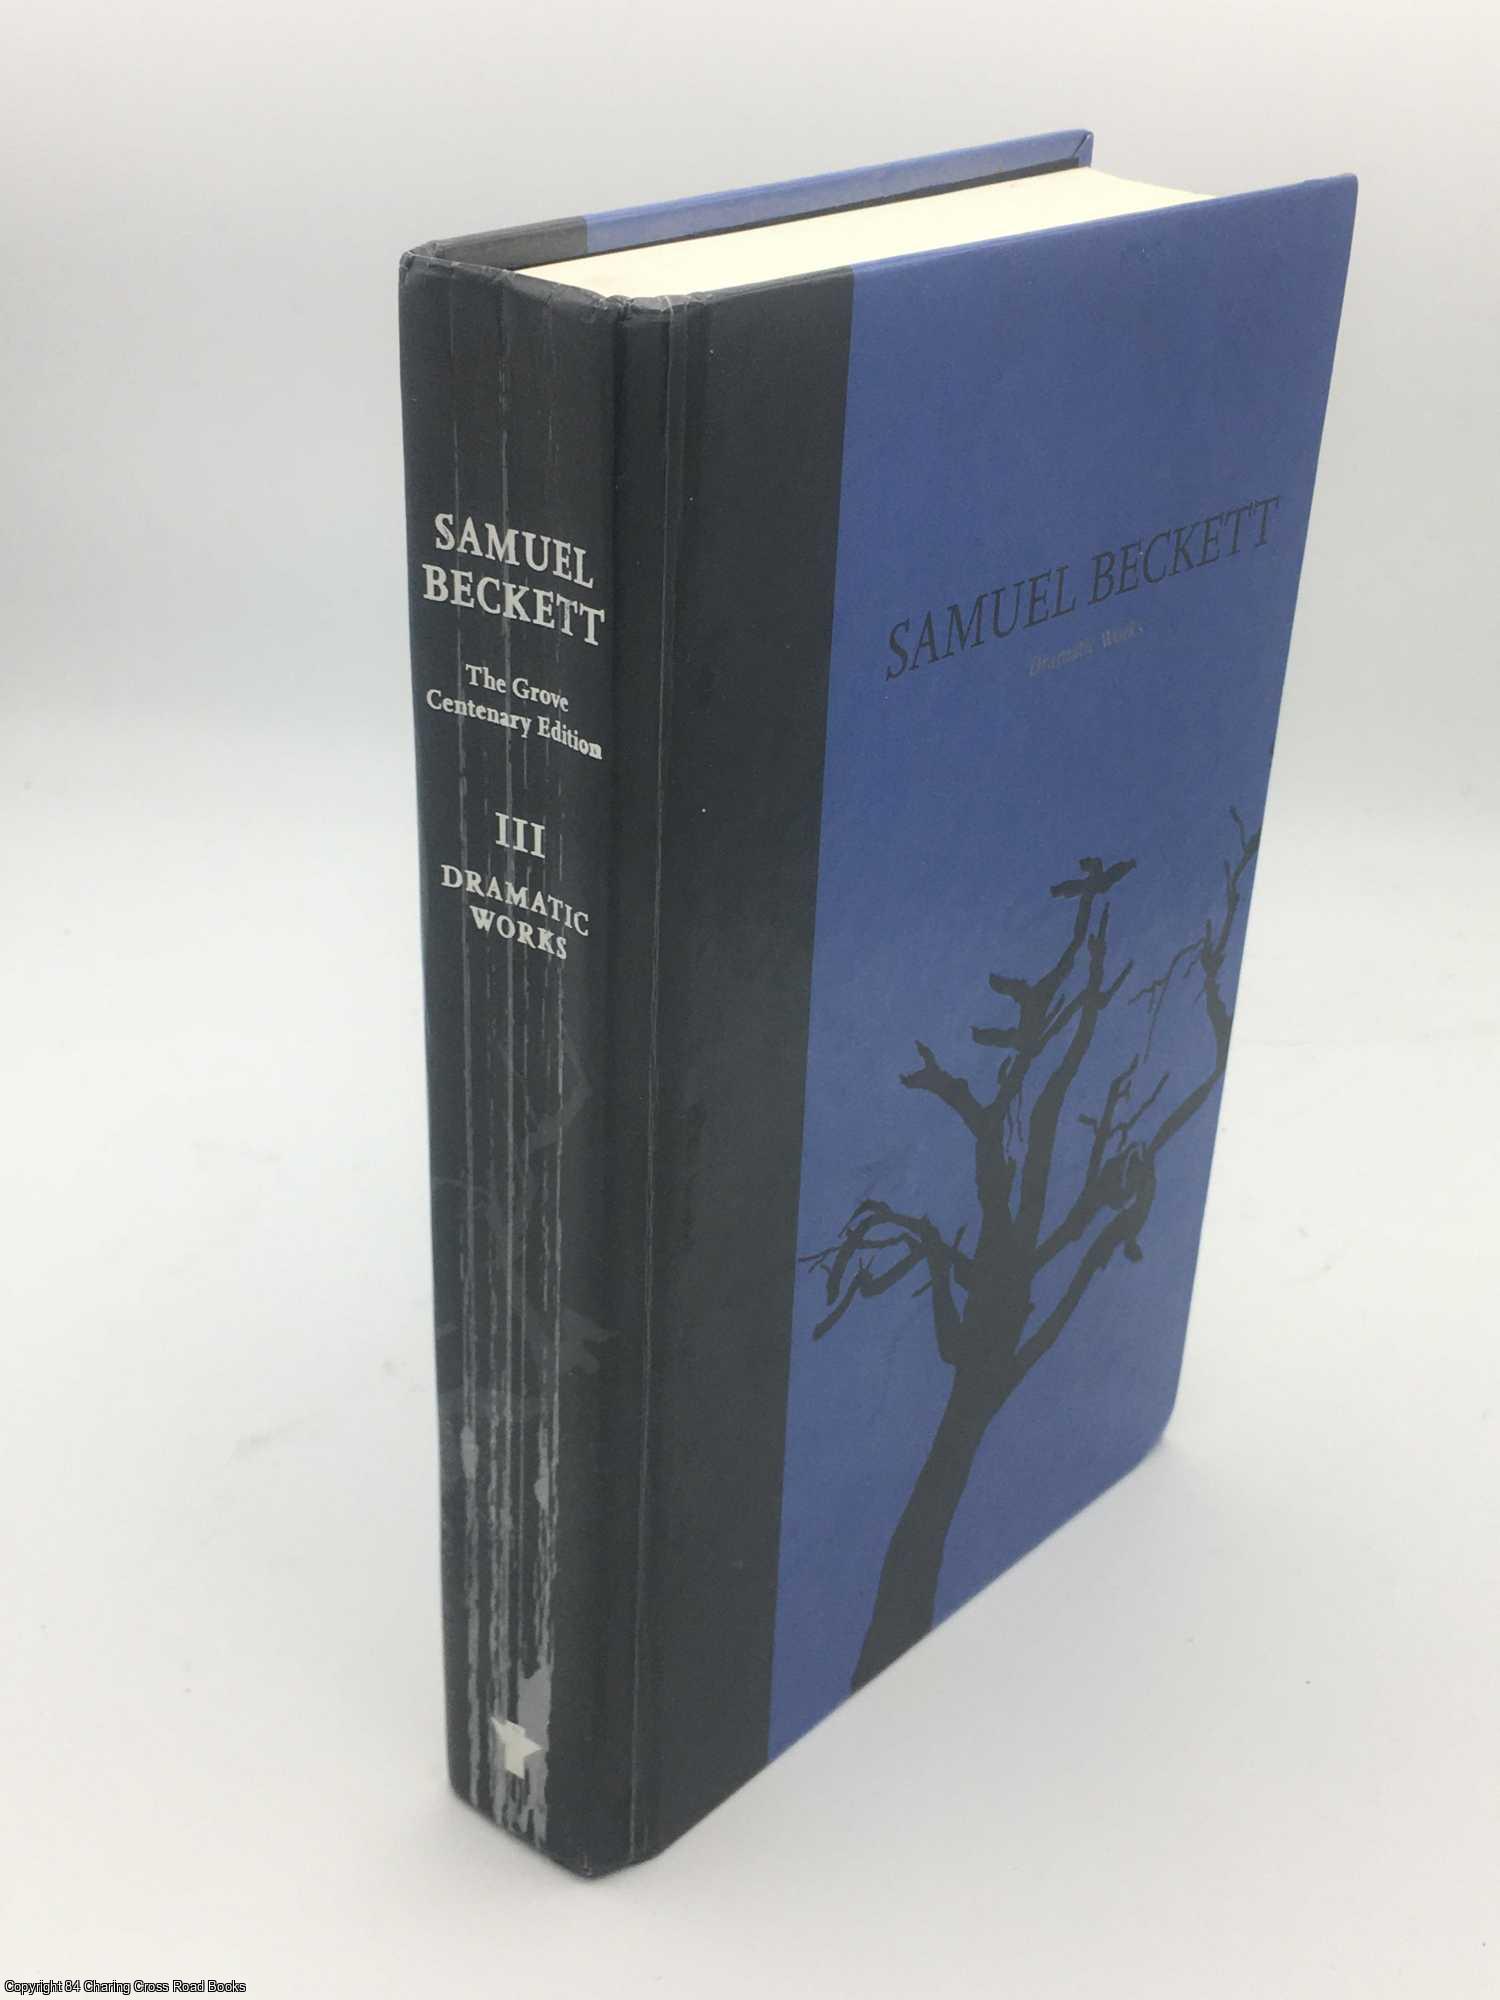 Beckett, Samuel - Dramatic Works: Volume III Grove Centenary Editions